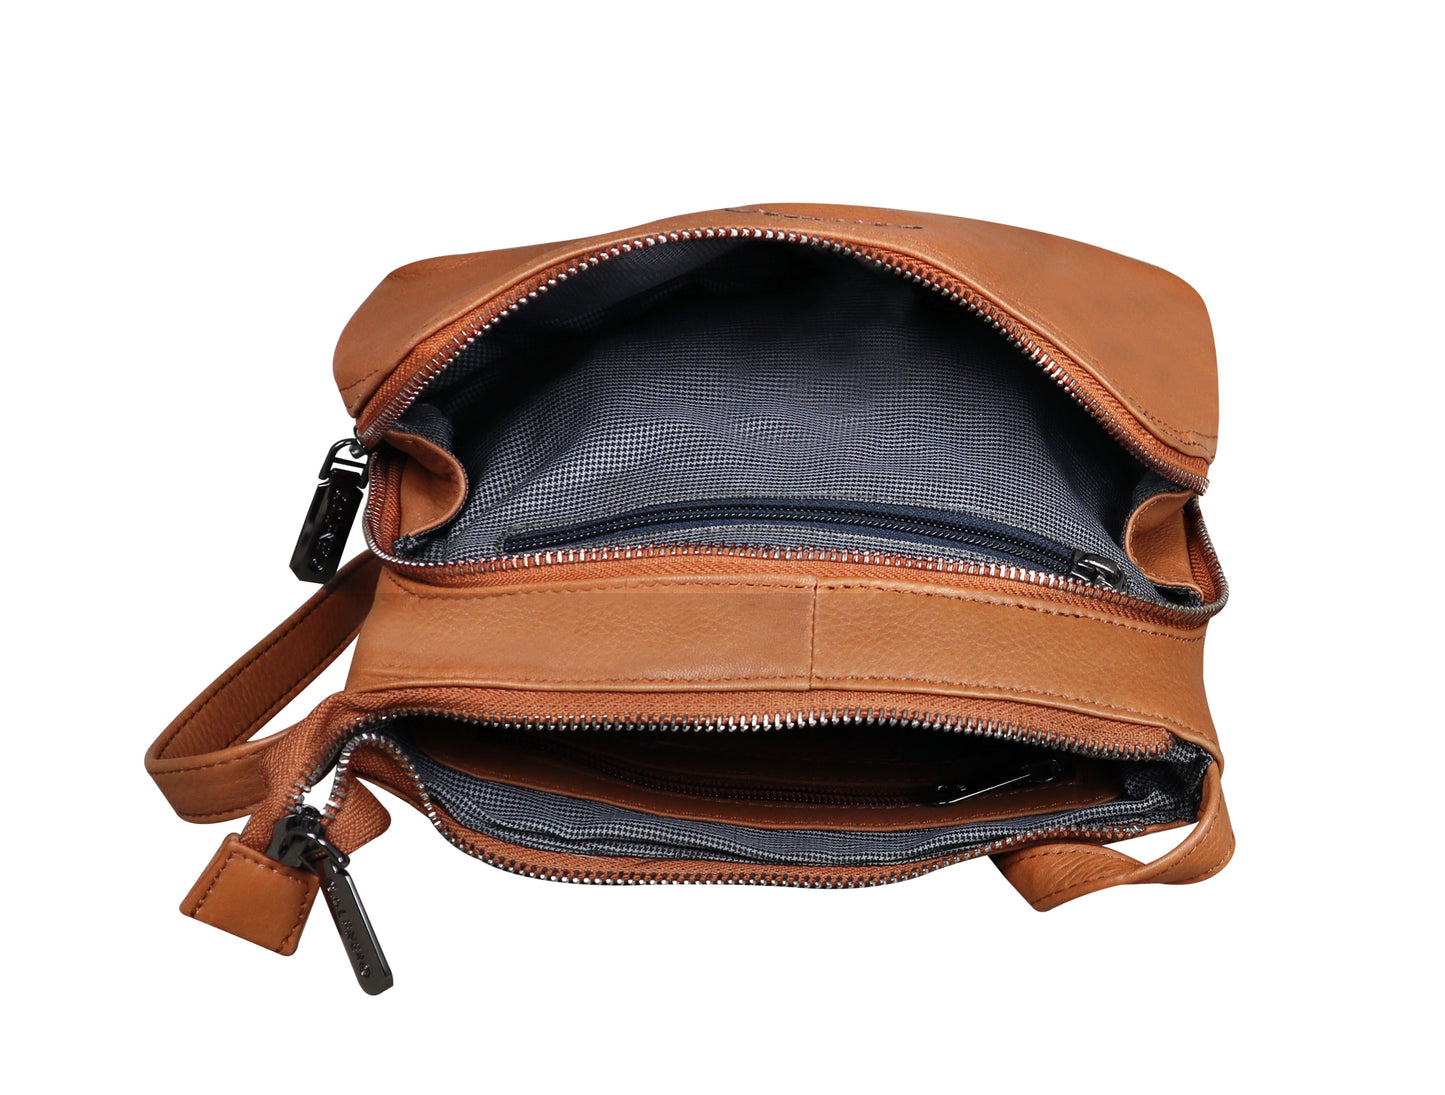 Calfnero Genuine Leather Women's Sling Bag (713935-Camel)